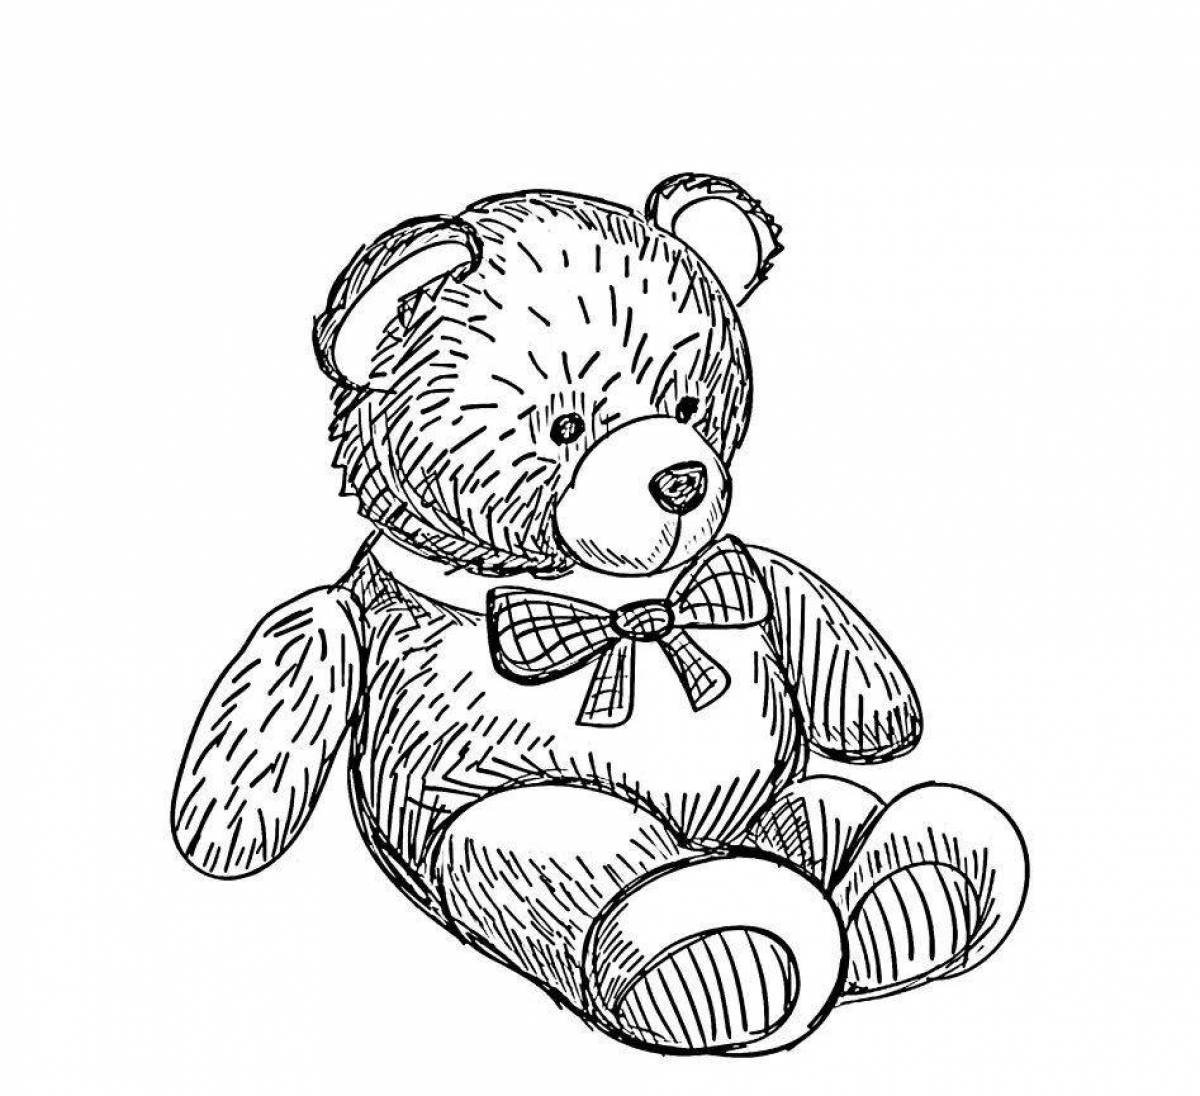 Adorable teddy bear drawing